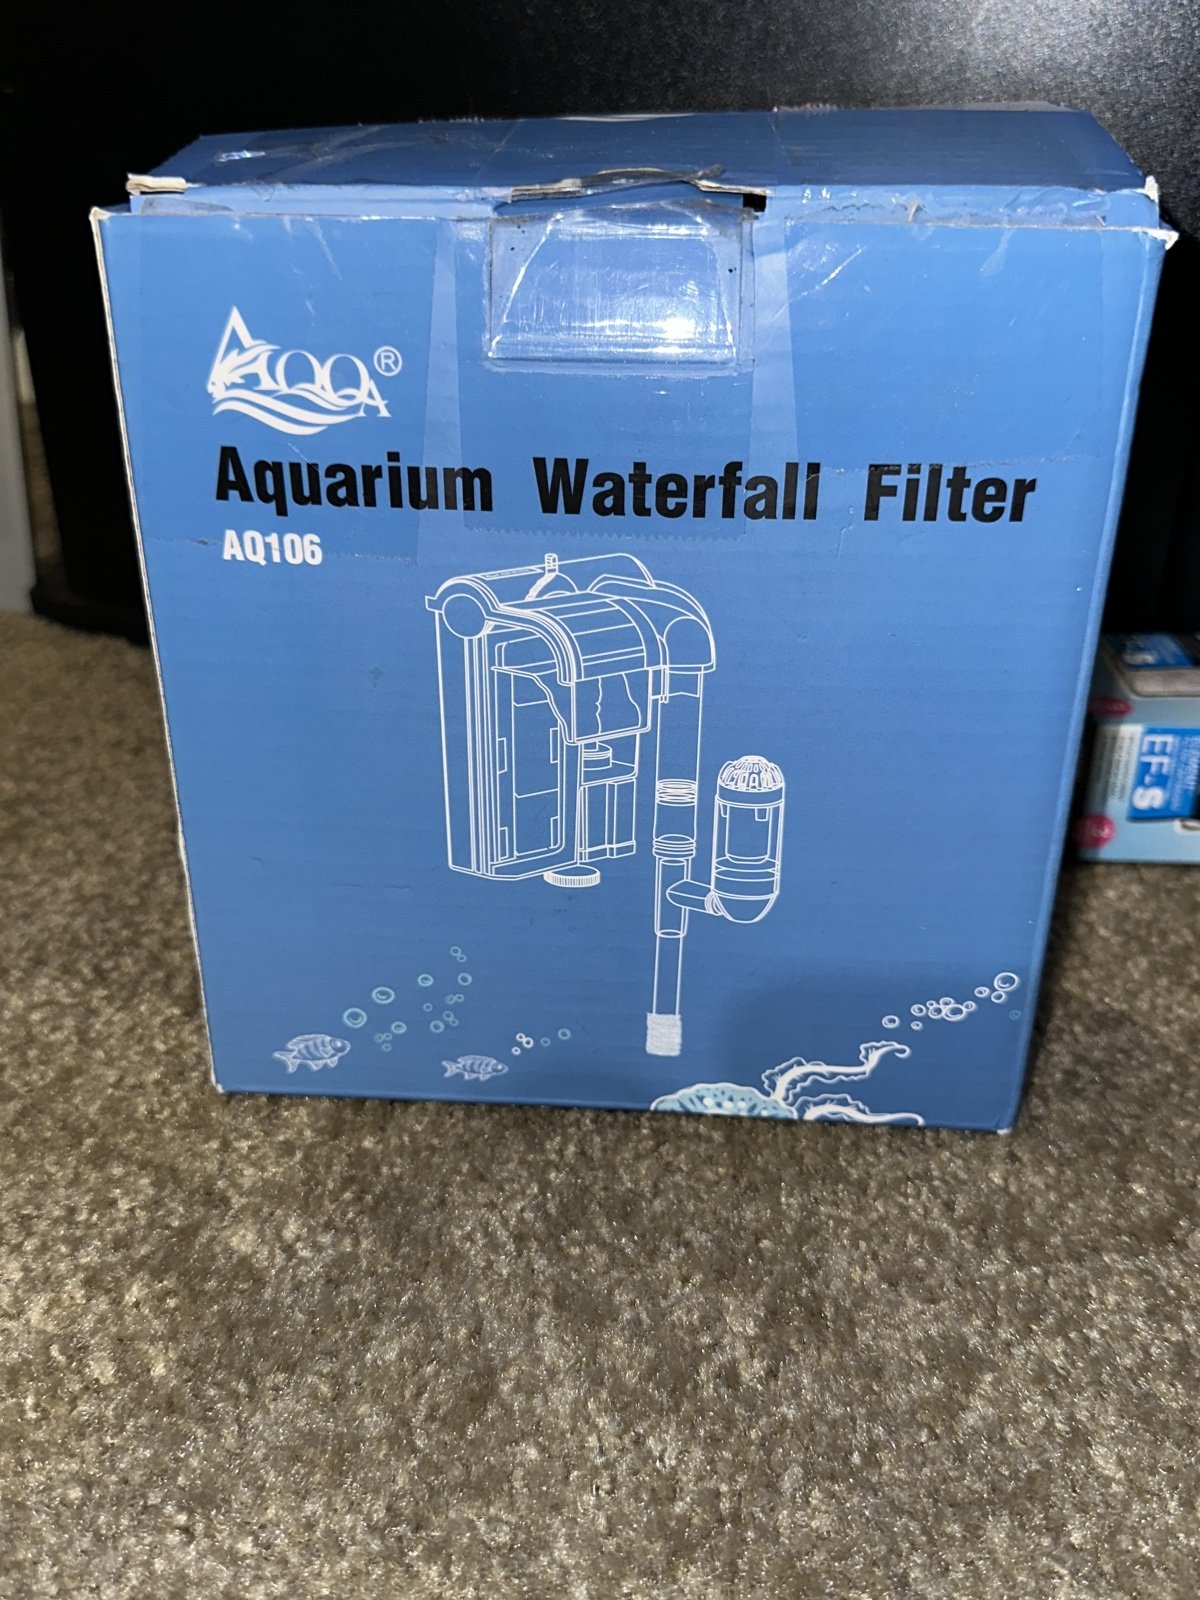 Aquarium waterfall filter 5-10 gallons a7i1X7hq5